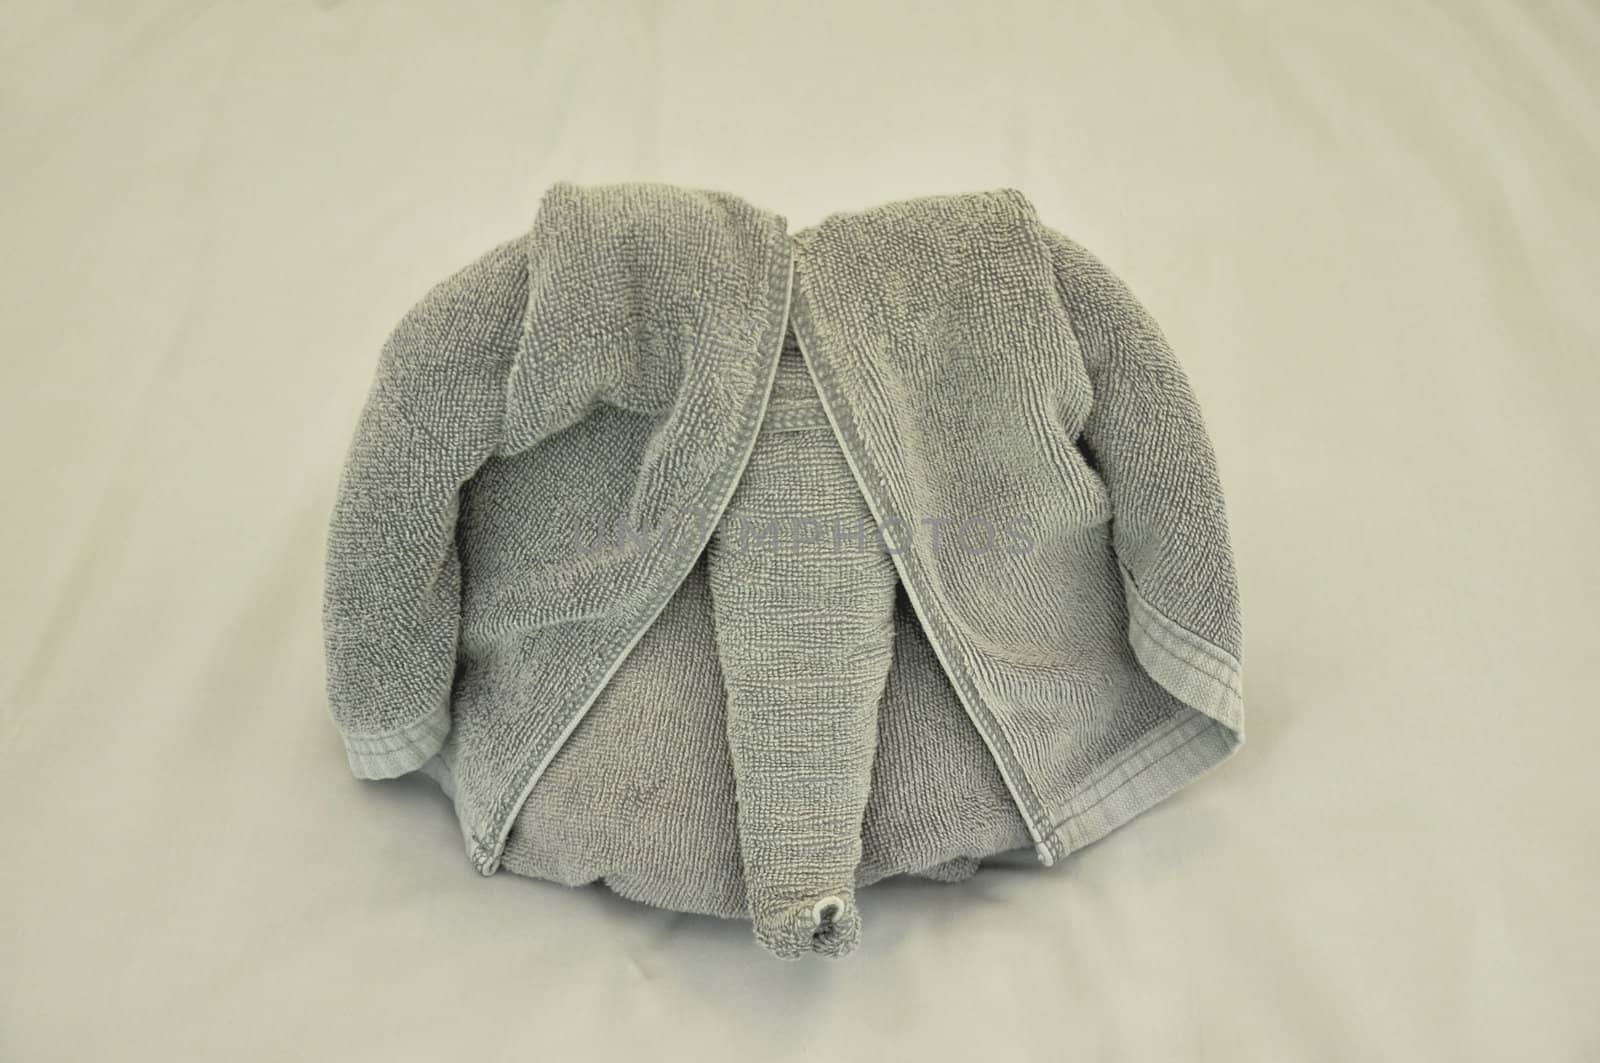 Grey towel is elephant figure.